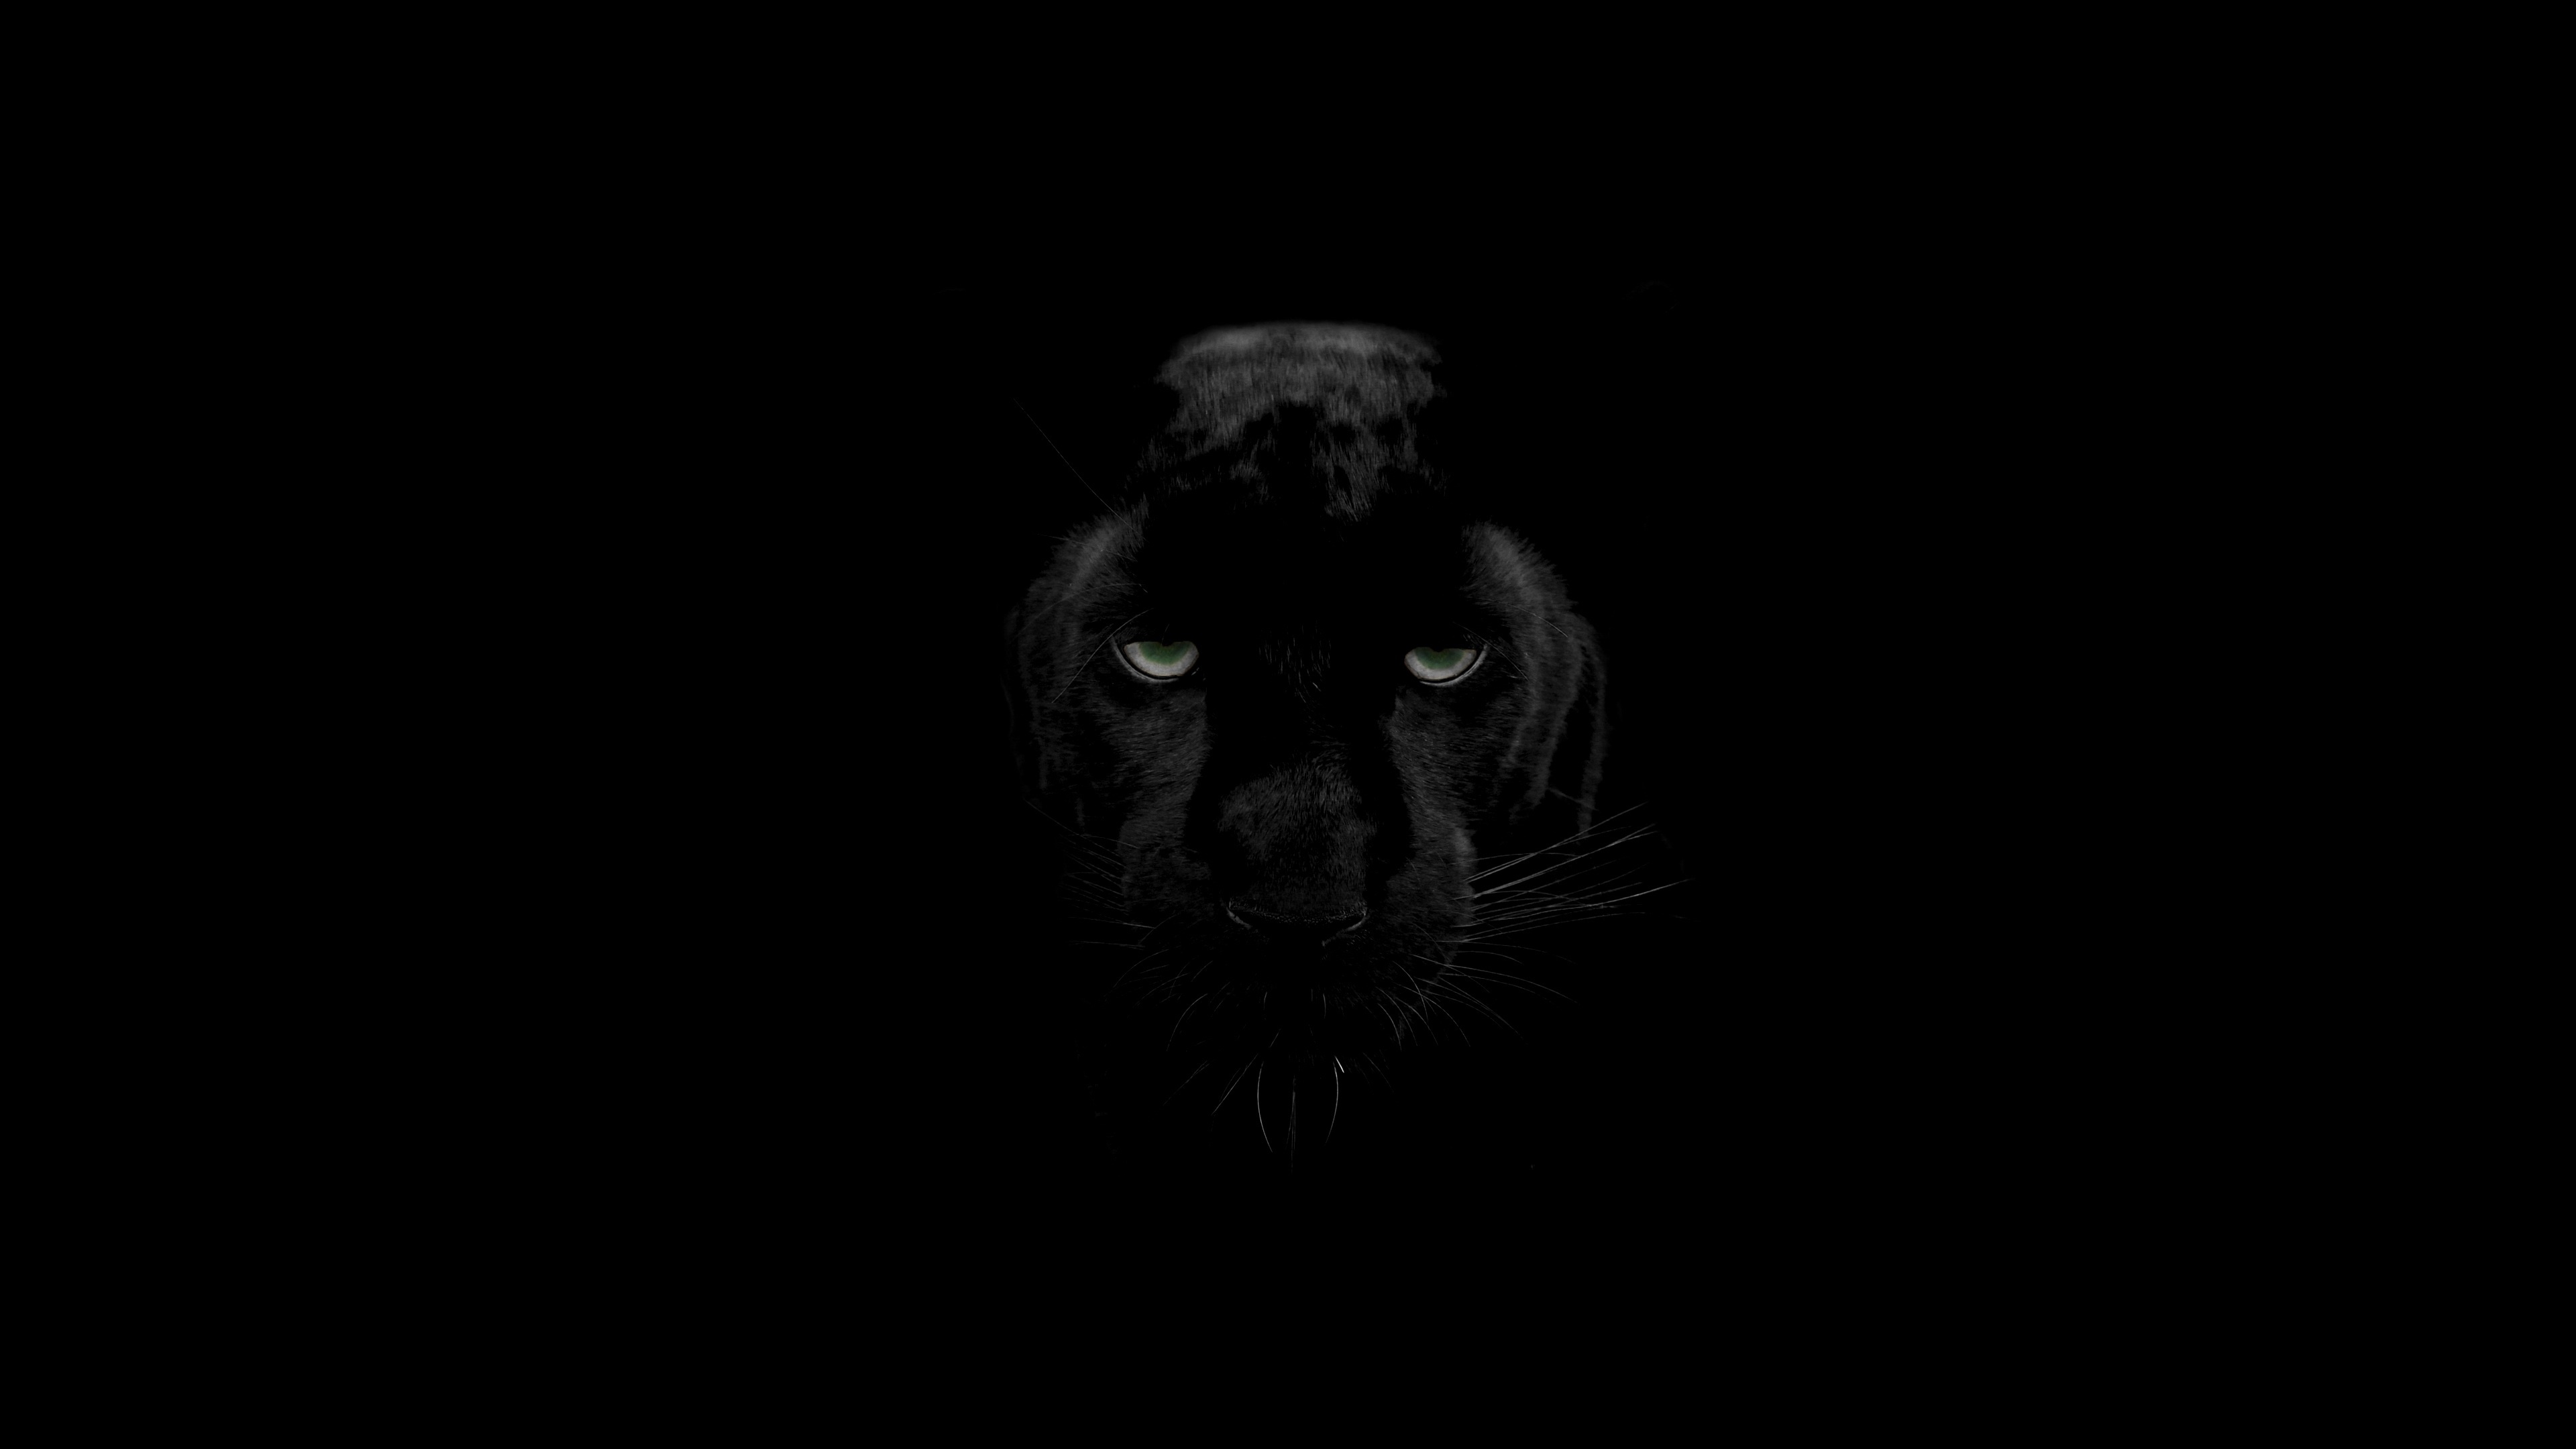 Ojos de de jaguar negro (panthera onca) sobresale de entre la oscuridad.